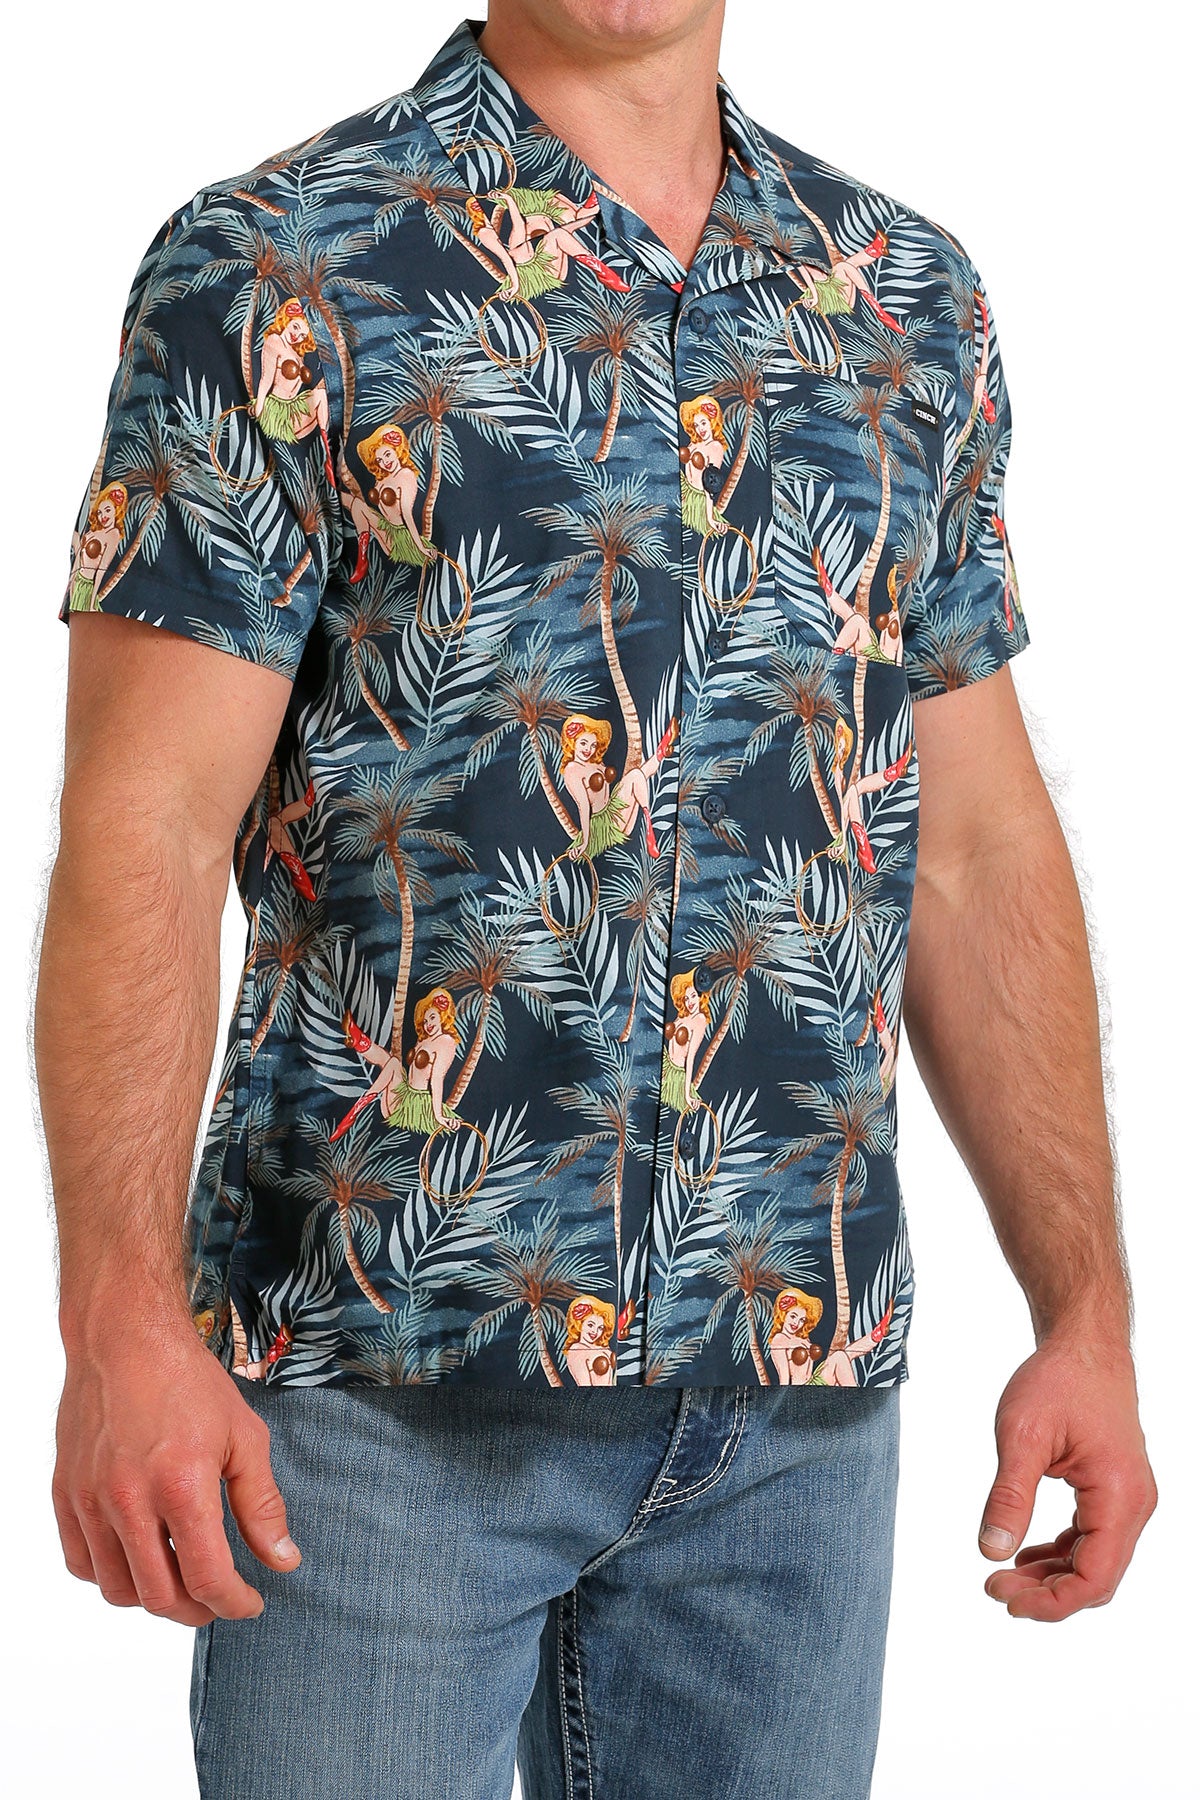 CINCH Men's Navy Hawaiian Button-Down Western Shirt